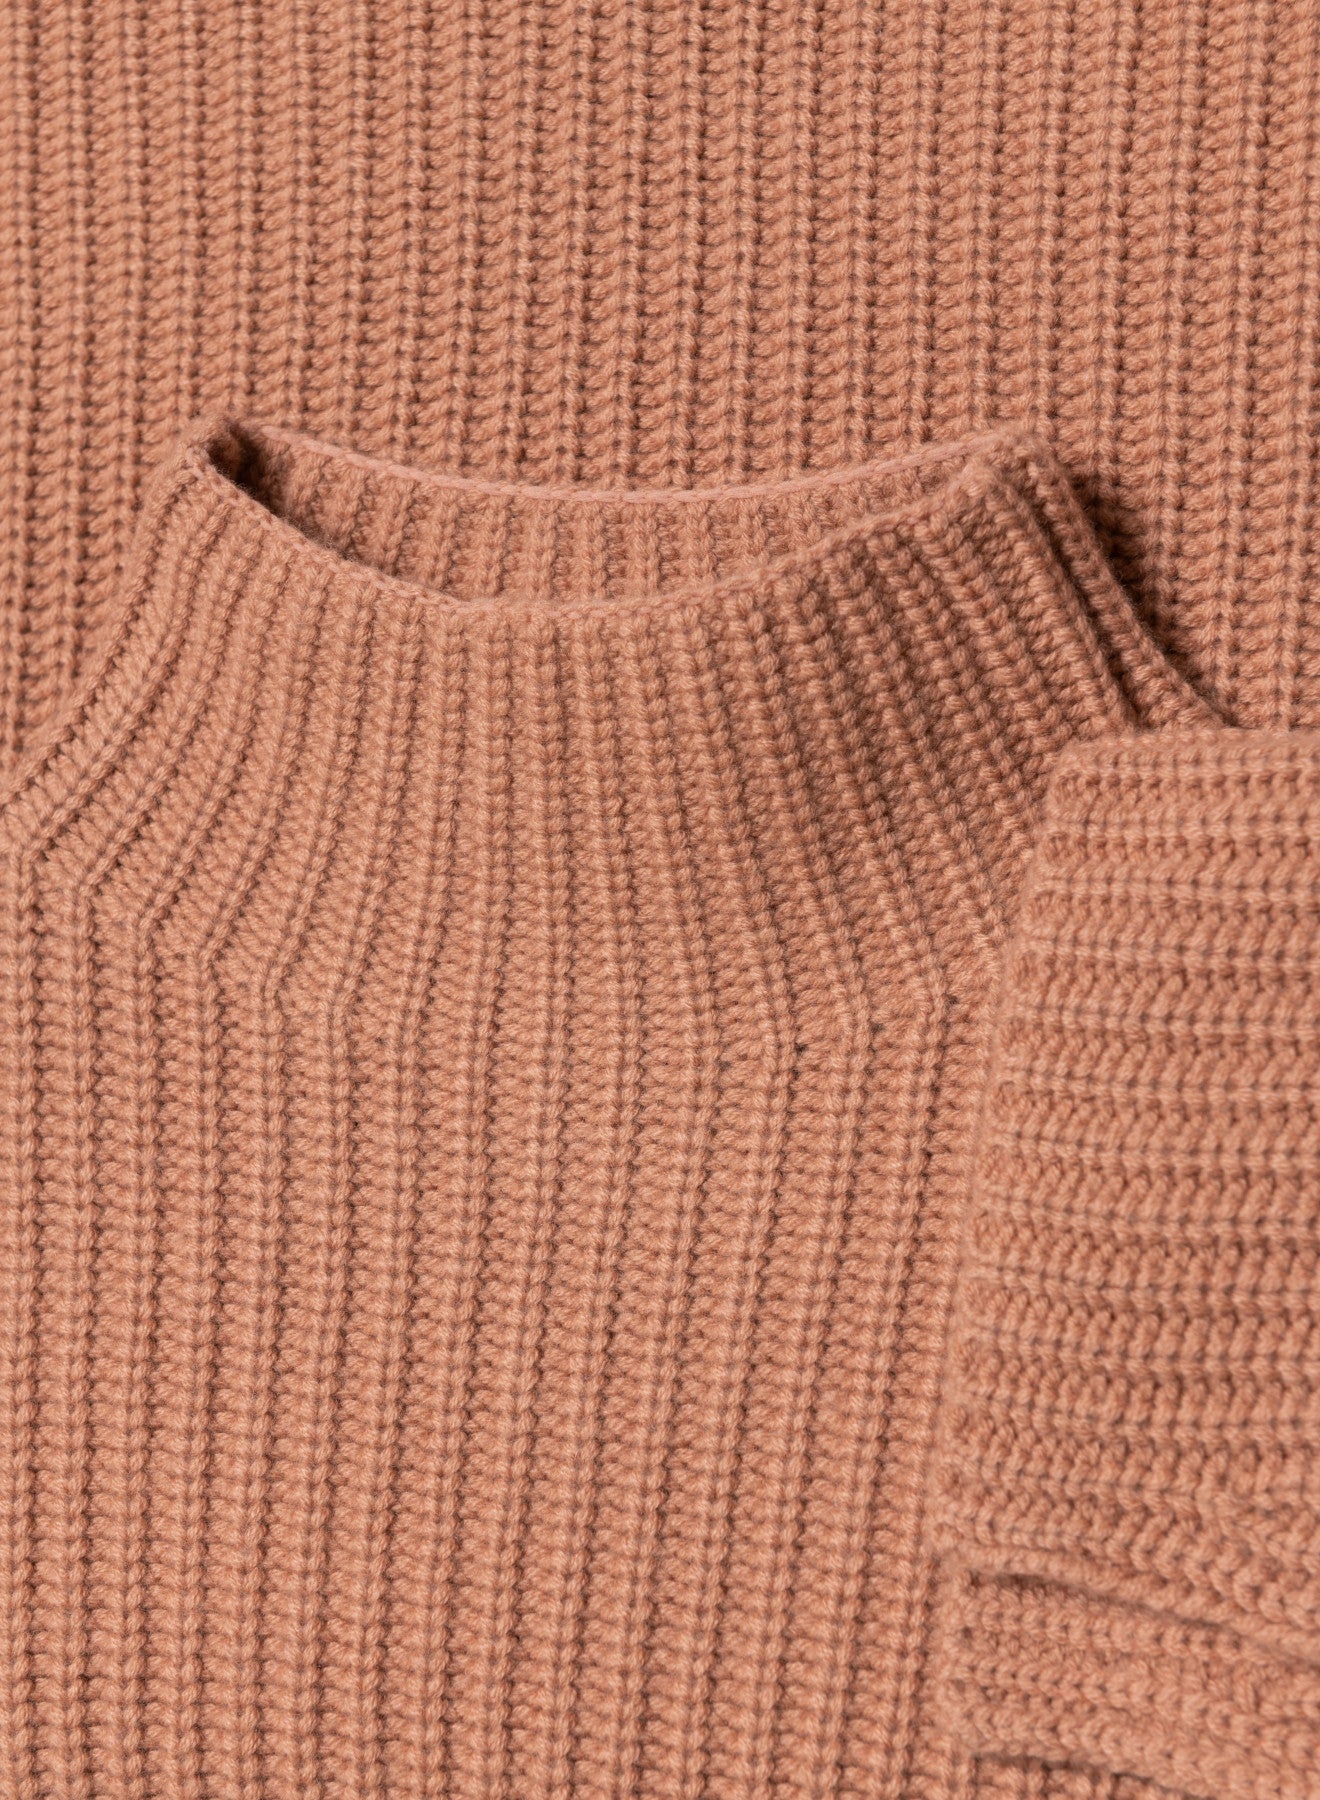 Sweater BOLOGNA